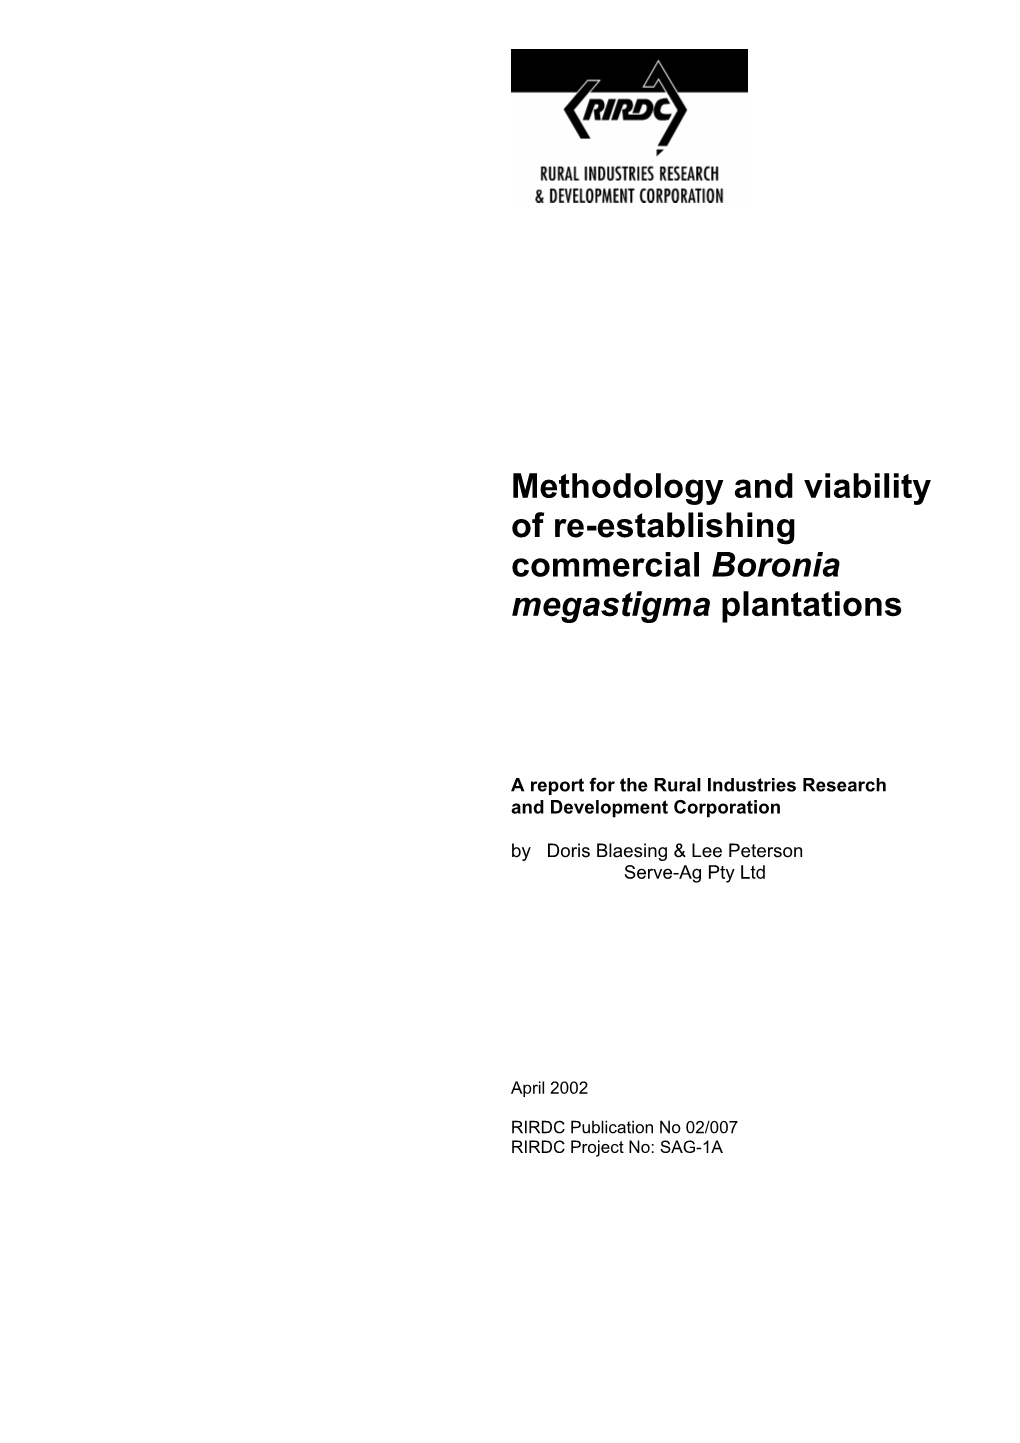 Methodology and Viability of Re-Establishing Commercial Boronia Megastigma Plantations